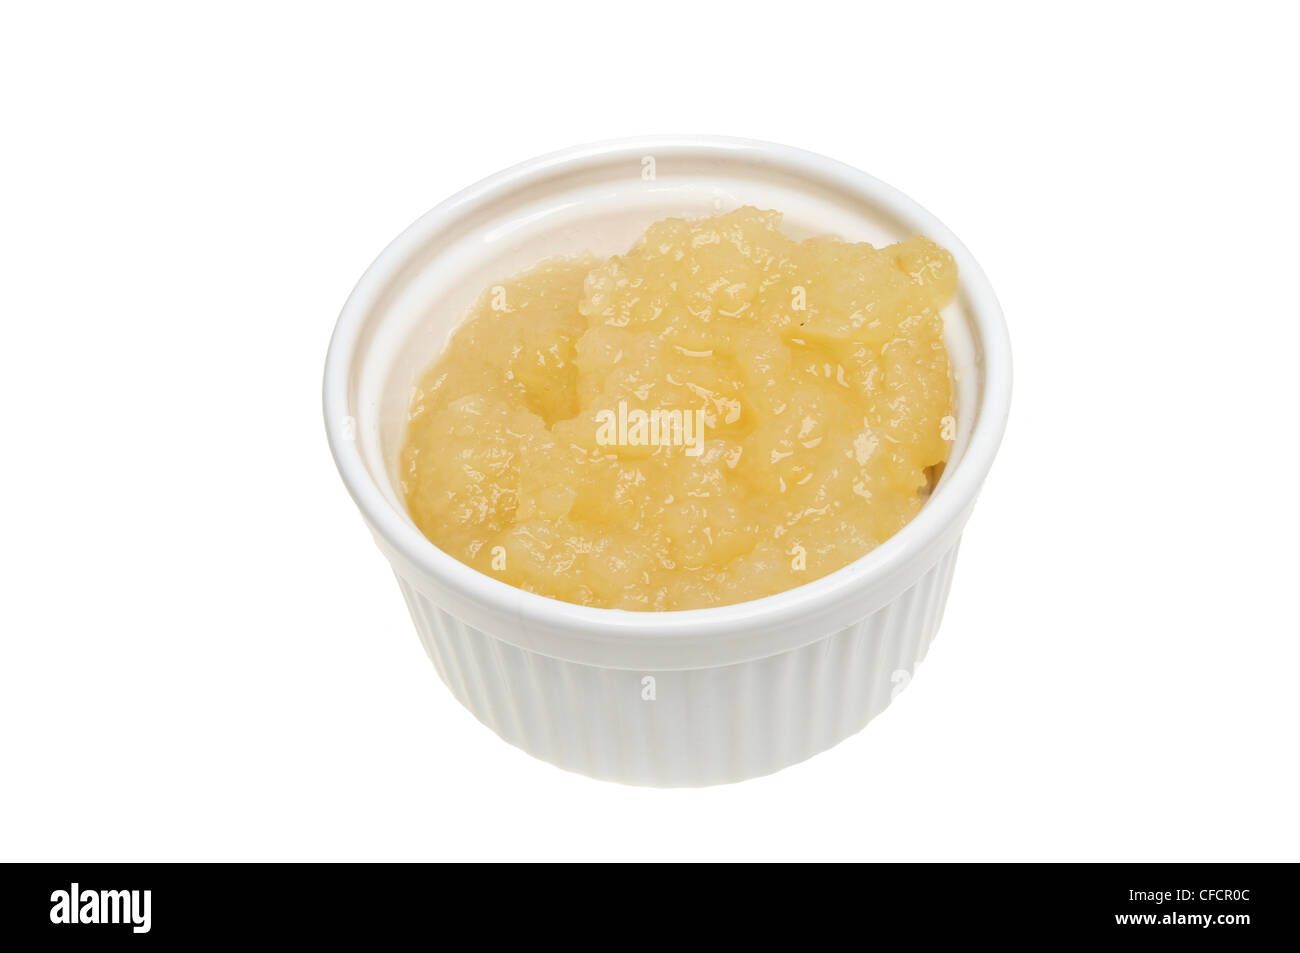 Salsa de manzana en un ramekin aislado contra un blanco Foto de stock